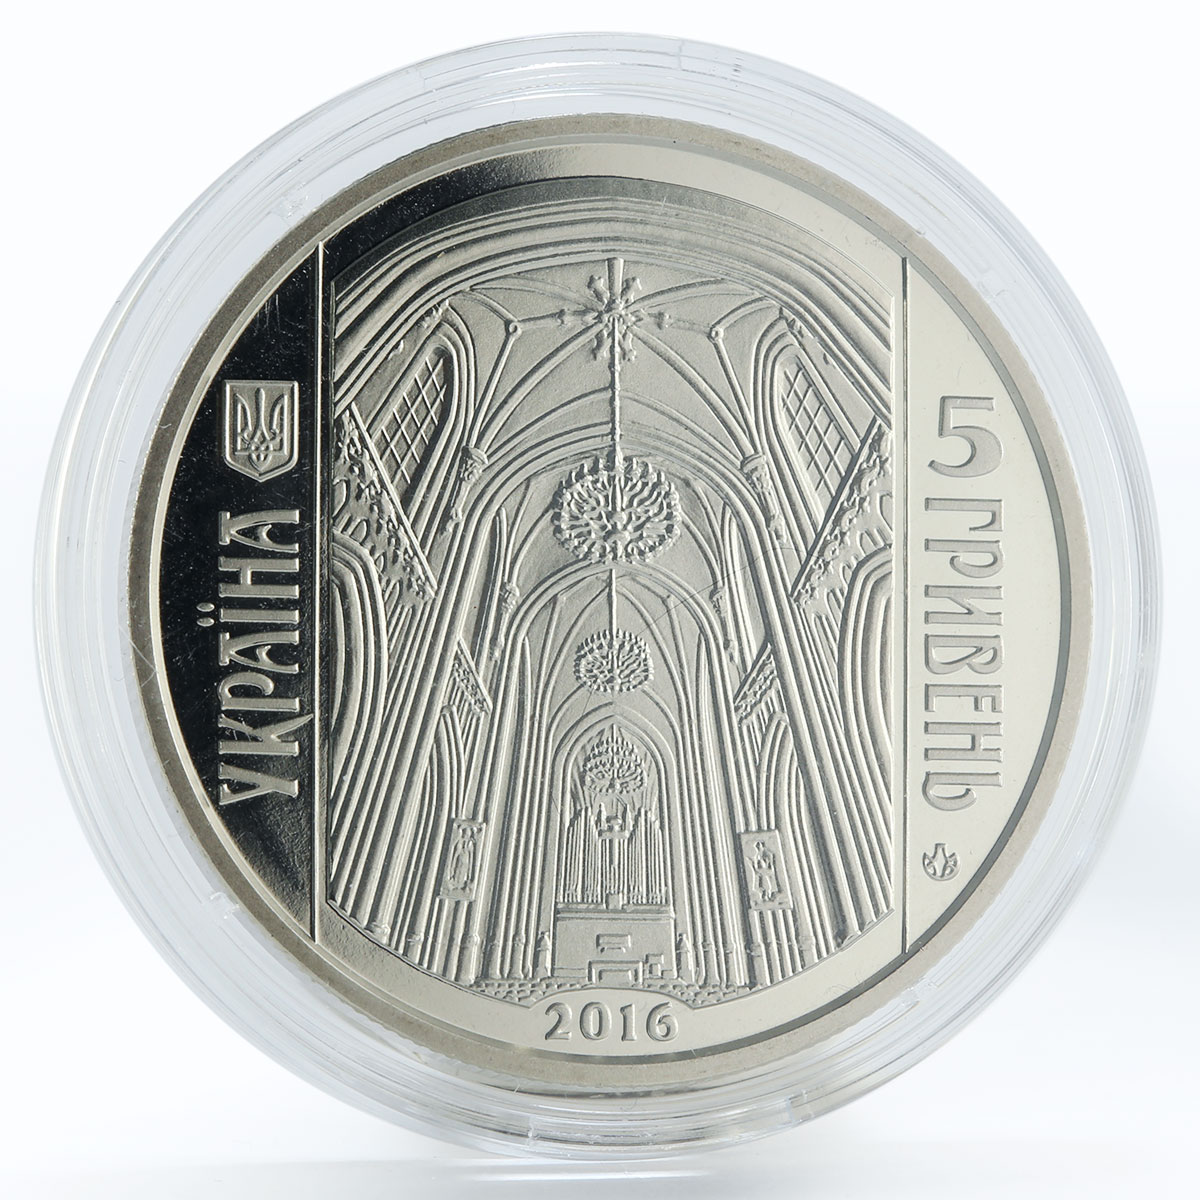 Ukraine 5 hryvnia church of St. Nicholas Kiev coin 2016